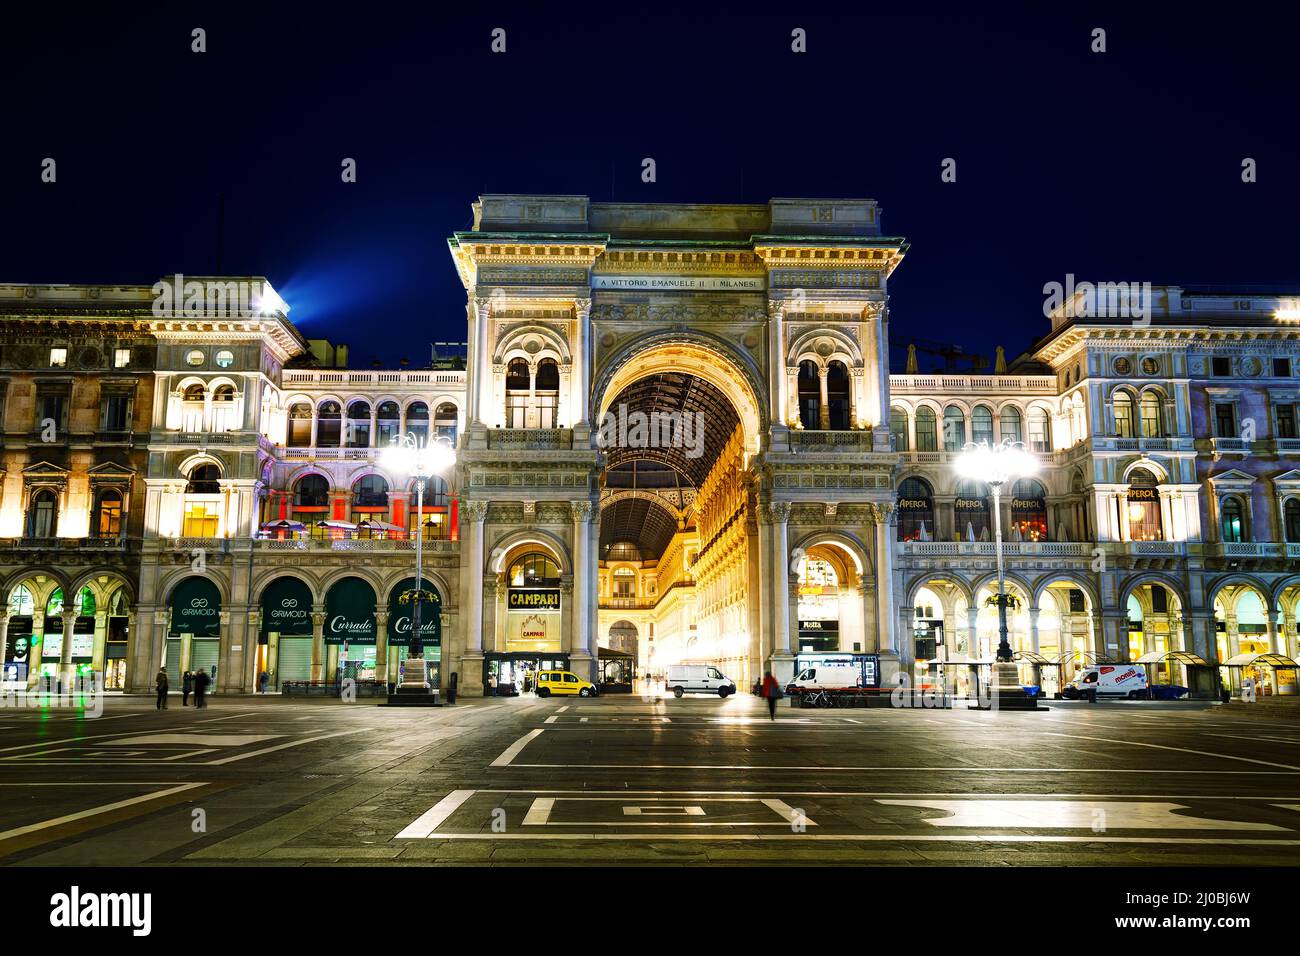 Galleria Vittorio Emanuele II shopping mall entrance in Milan, Italy ...